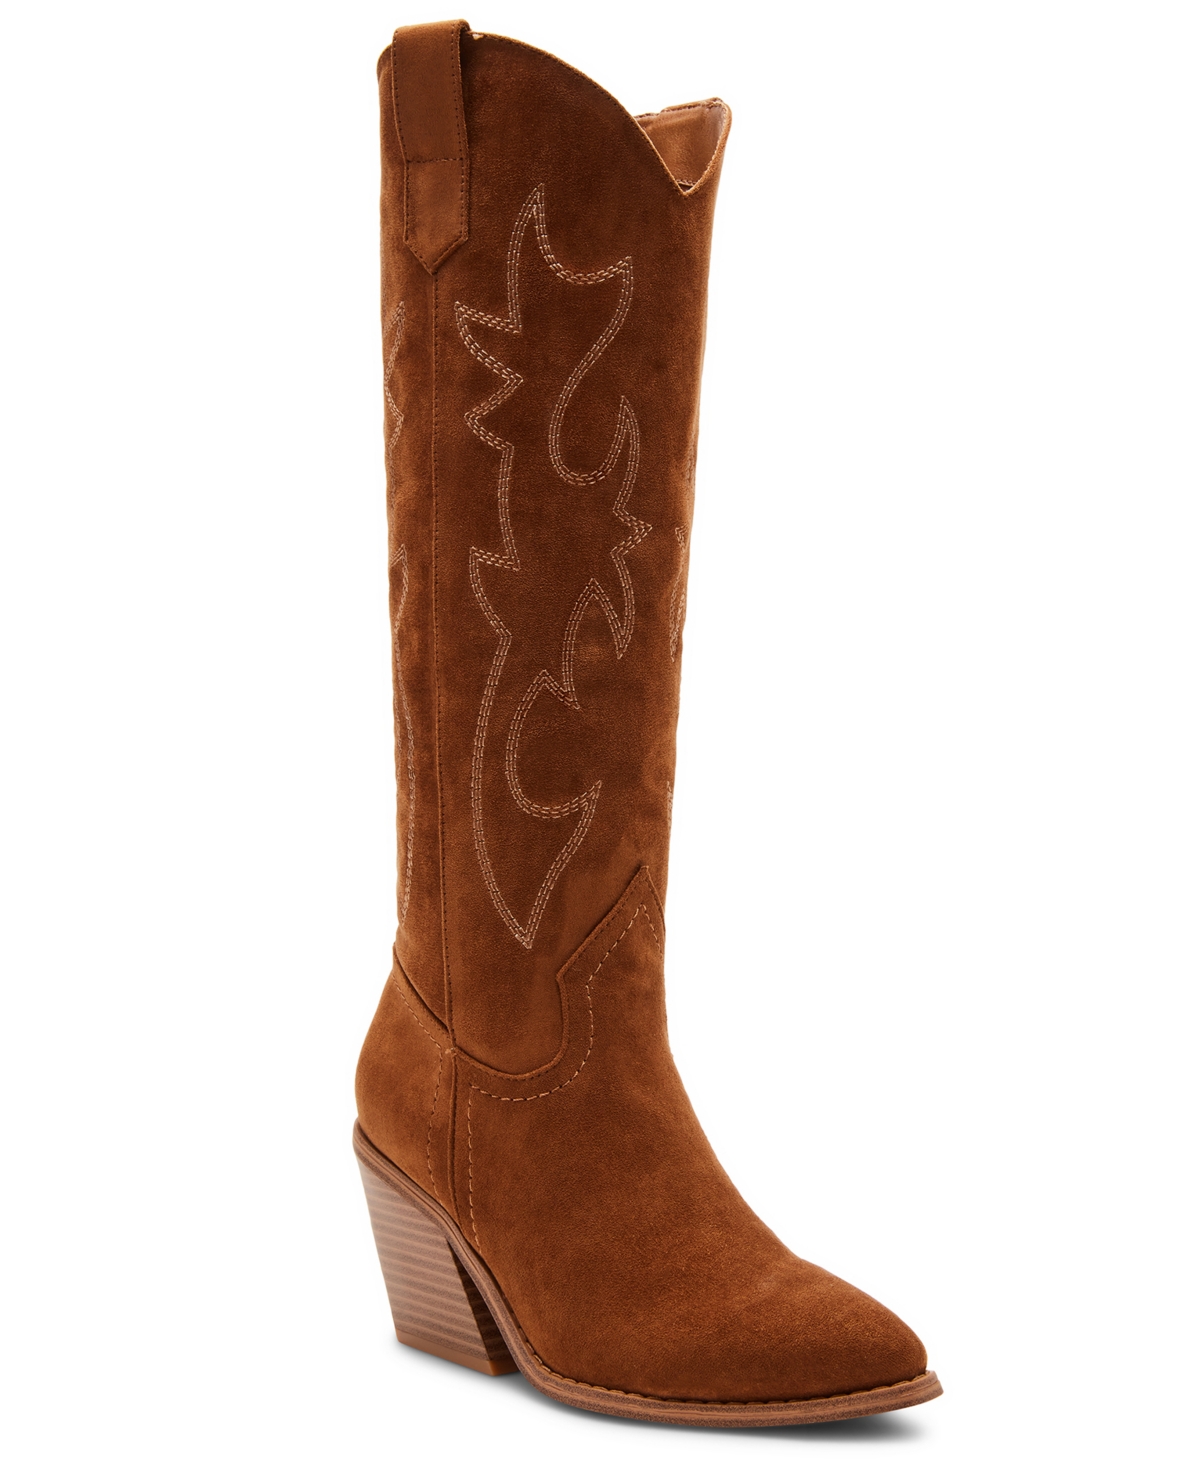 Madden Girl Arizona Knee High Cowboy Boots In Chestnut Suede